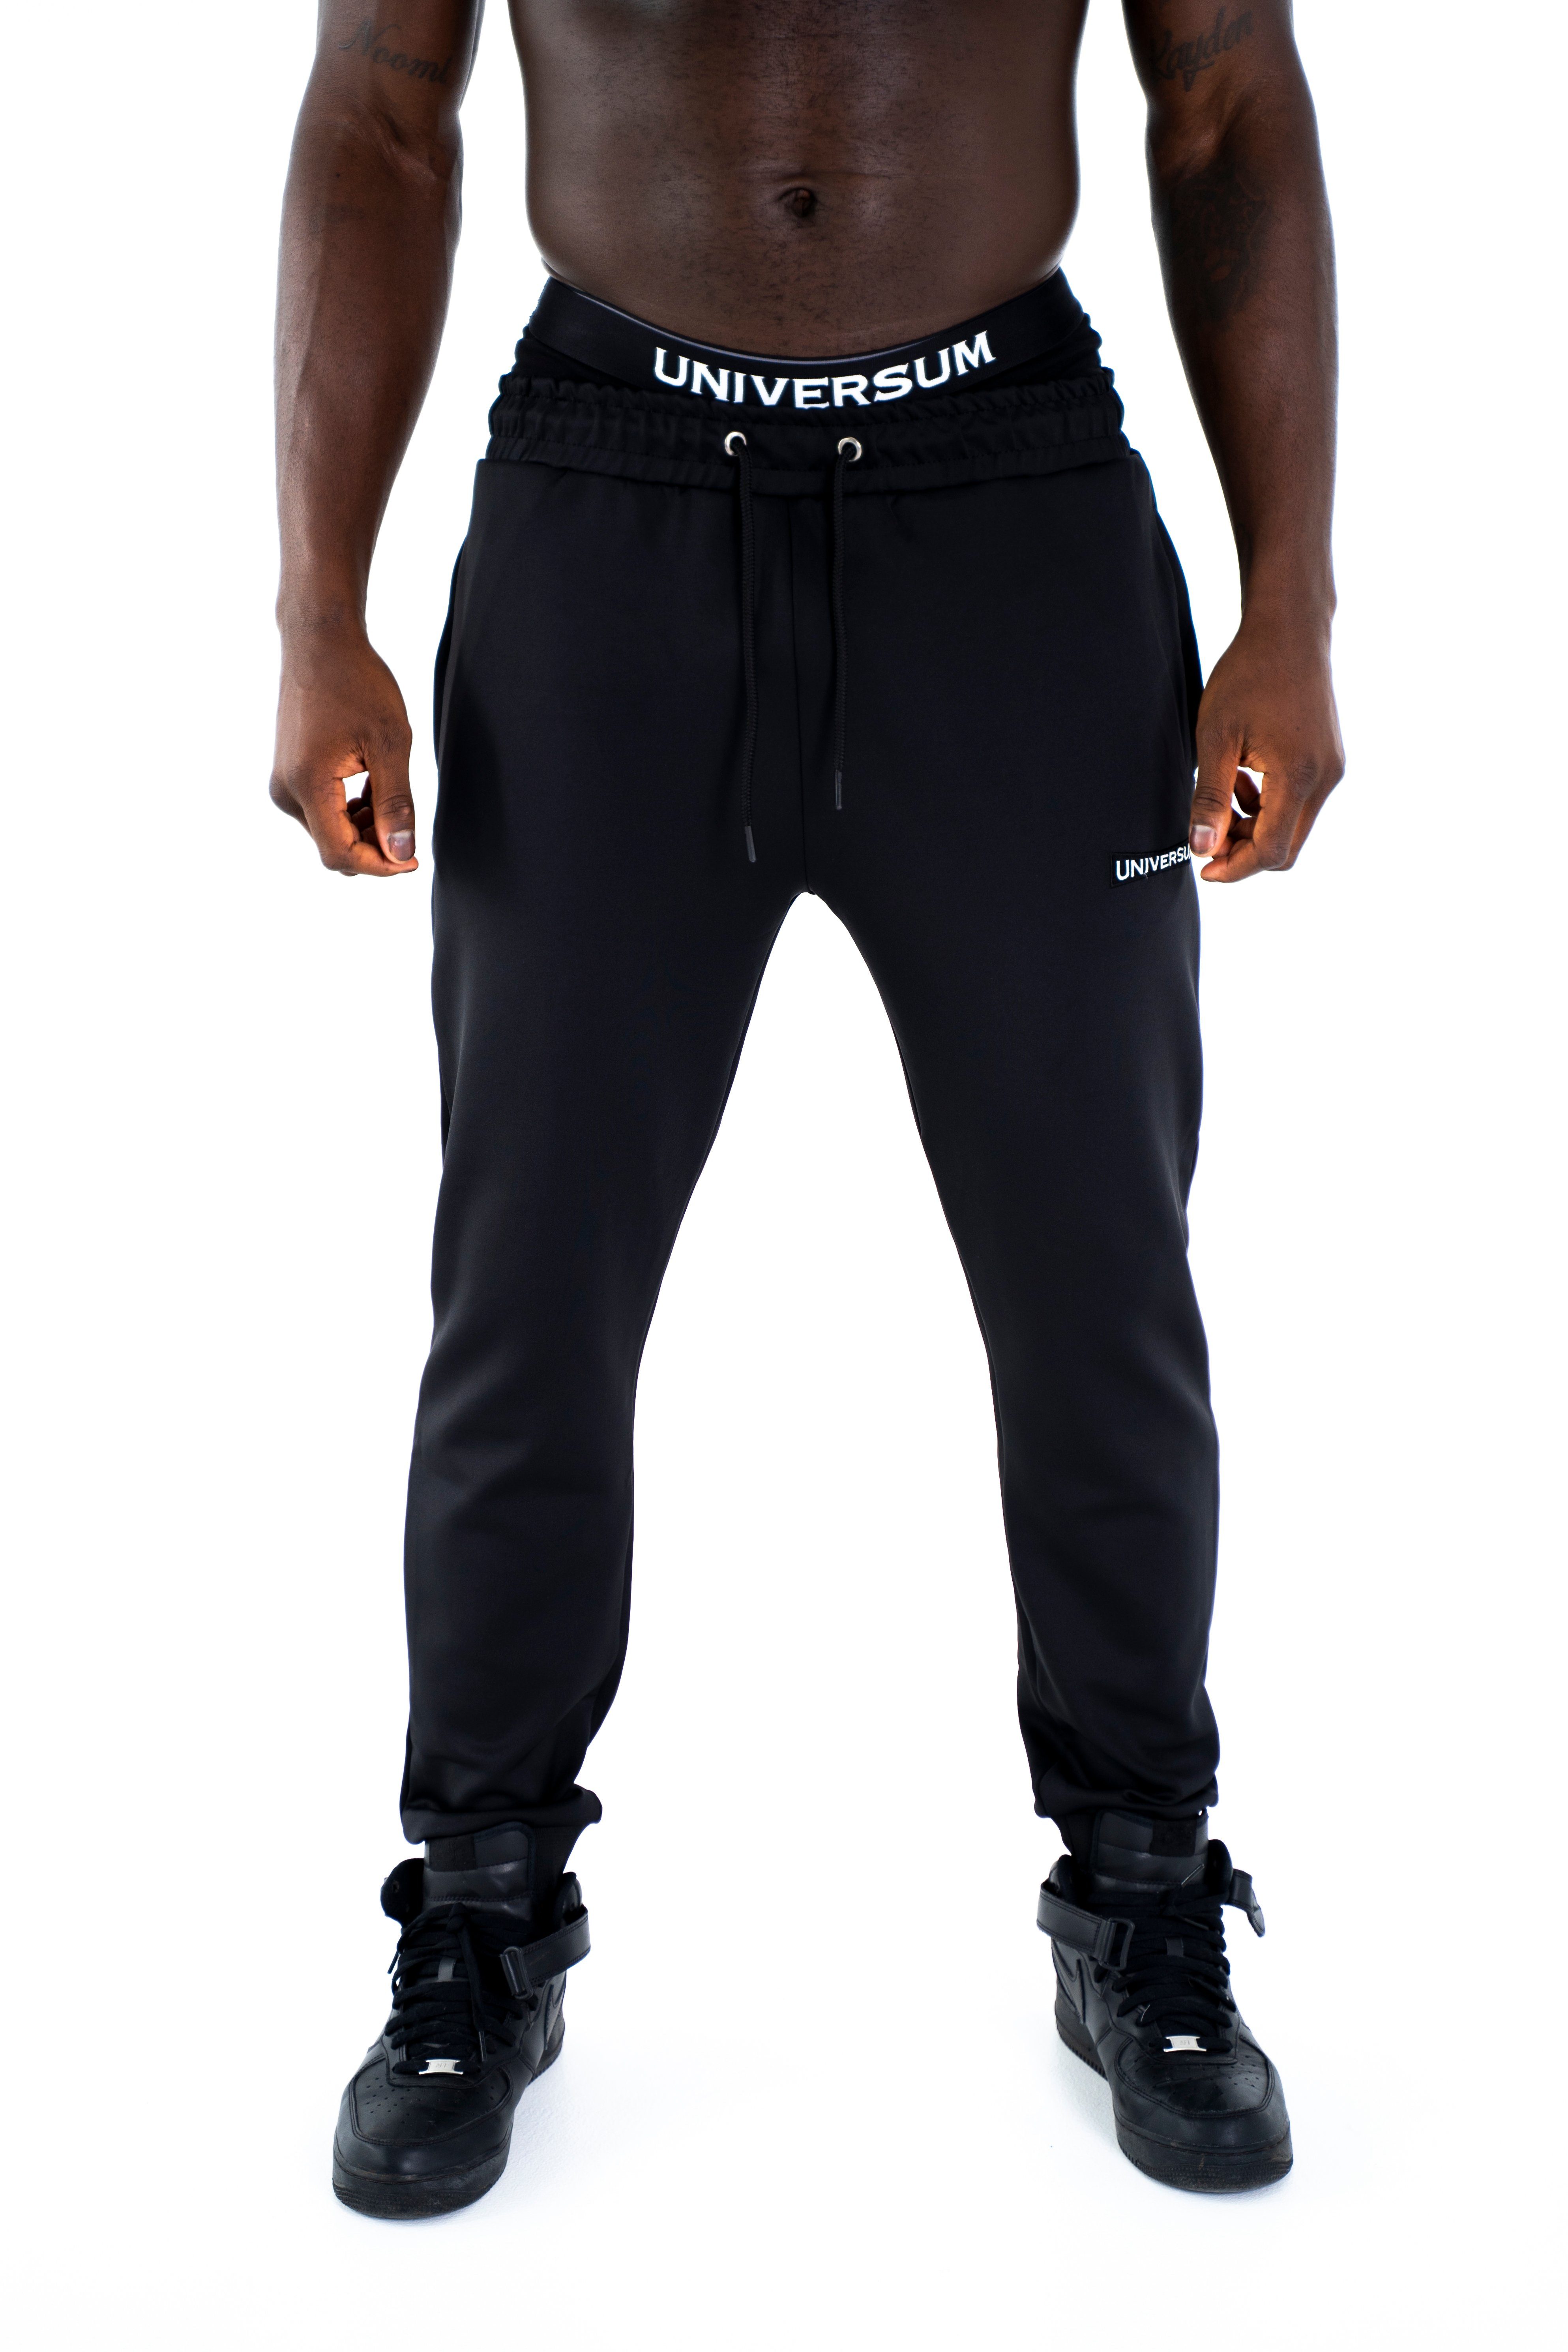 Jogginghose für Freizeit schwarz Universum Sport, Fitness Modern Jogginghose und Pants Sportwear Fit